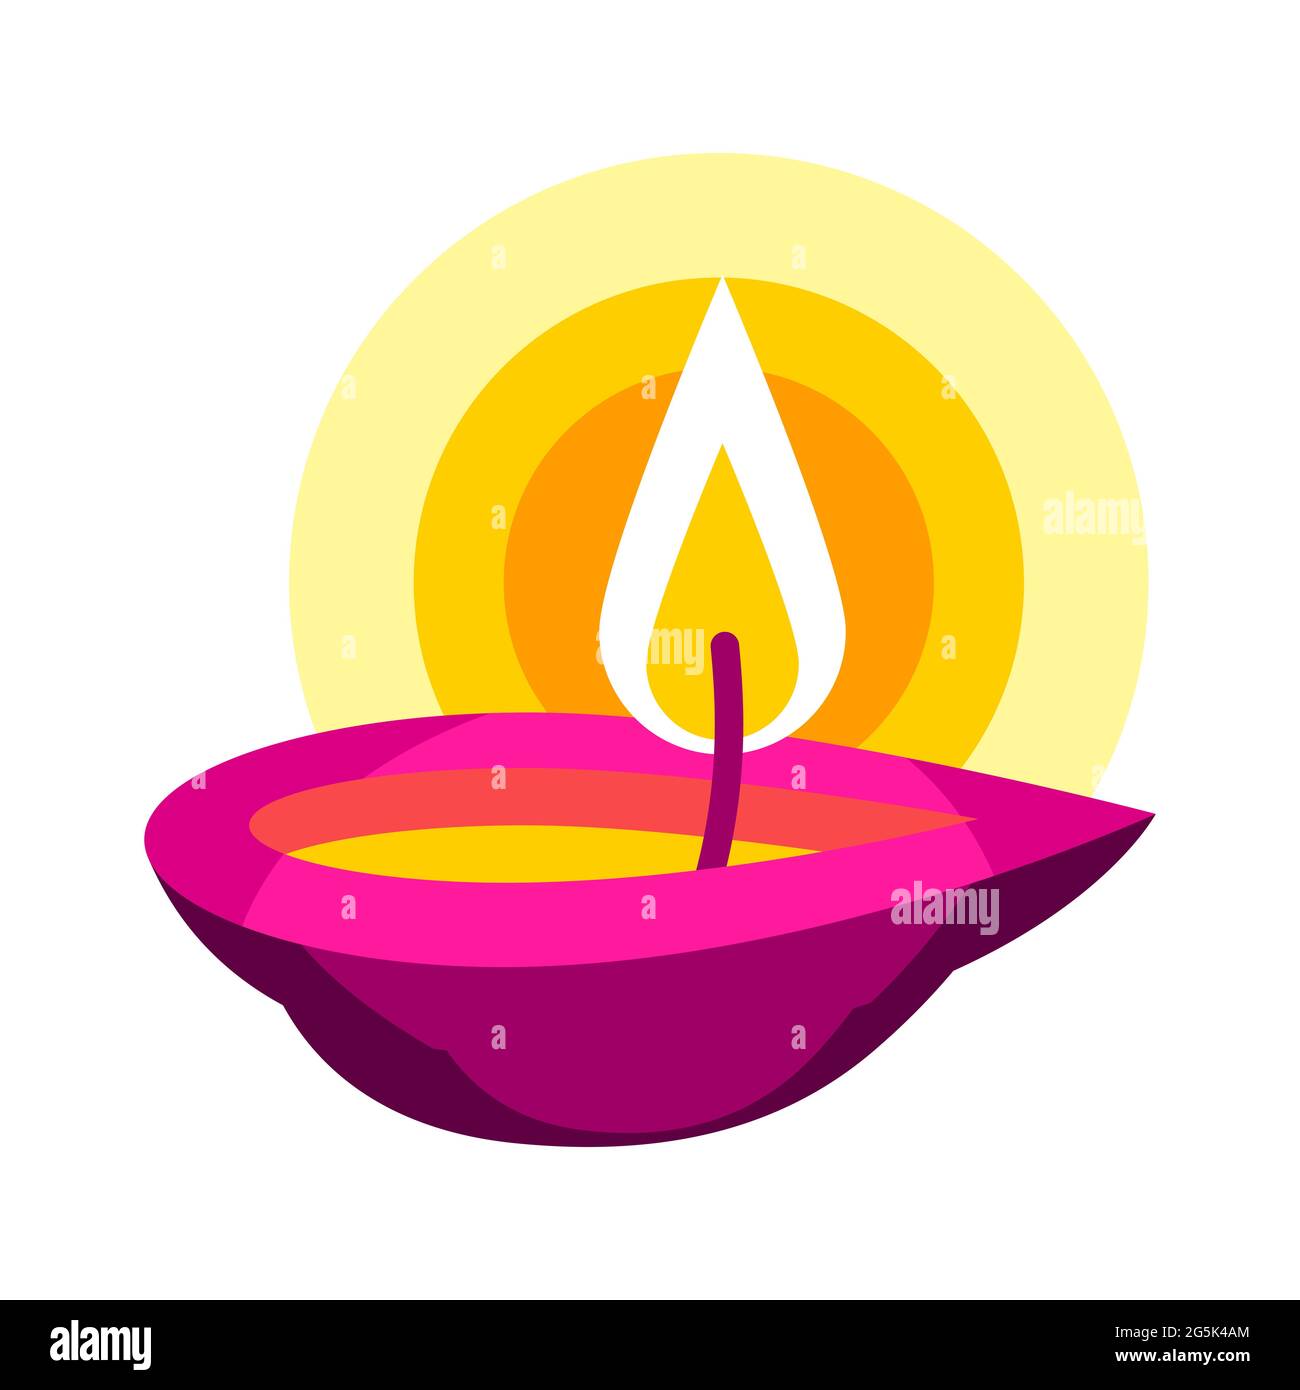 Top 999+ diwali lights images – Amazing Collection diwali lights images Full 4K